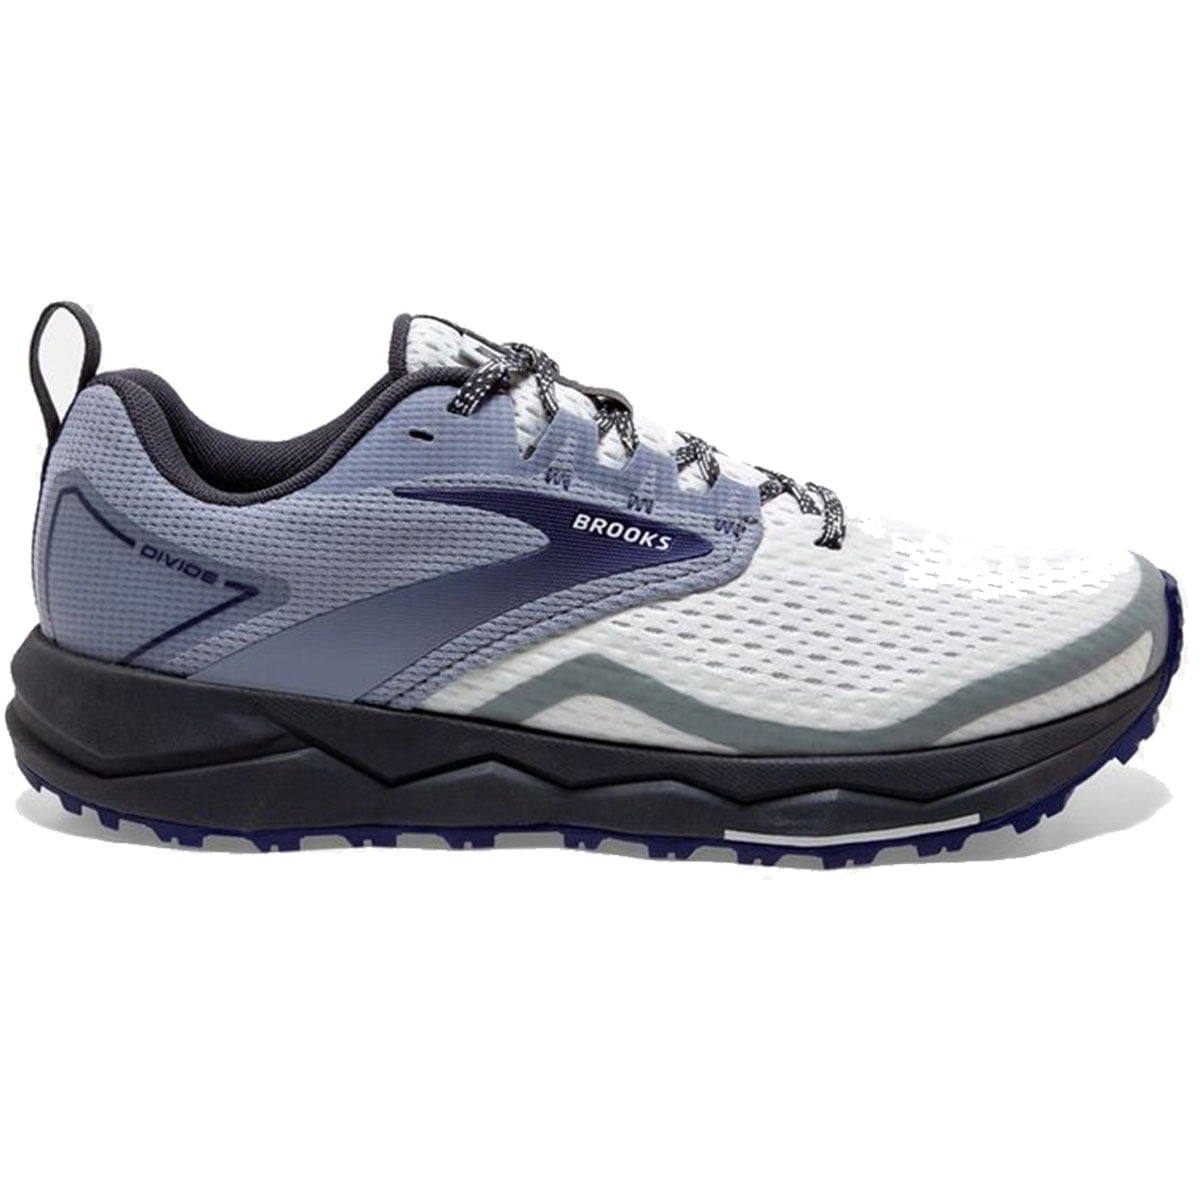 Brooks Brooks Divide 2 Trail Running Shoes for Women - Walmart.com